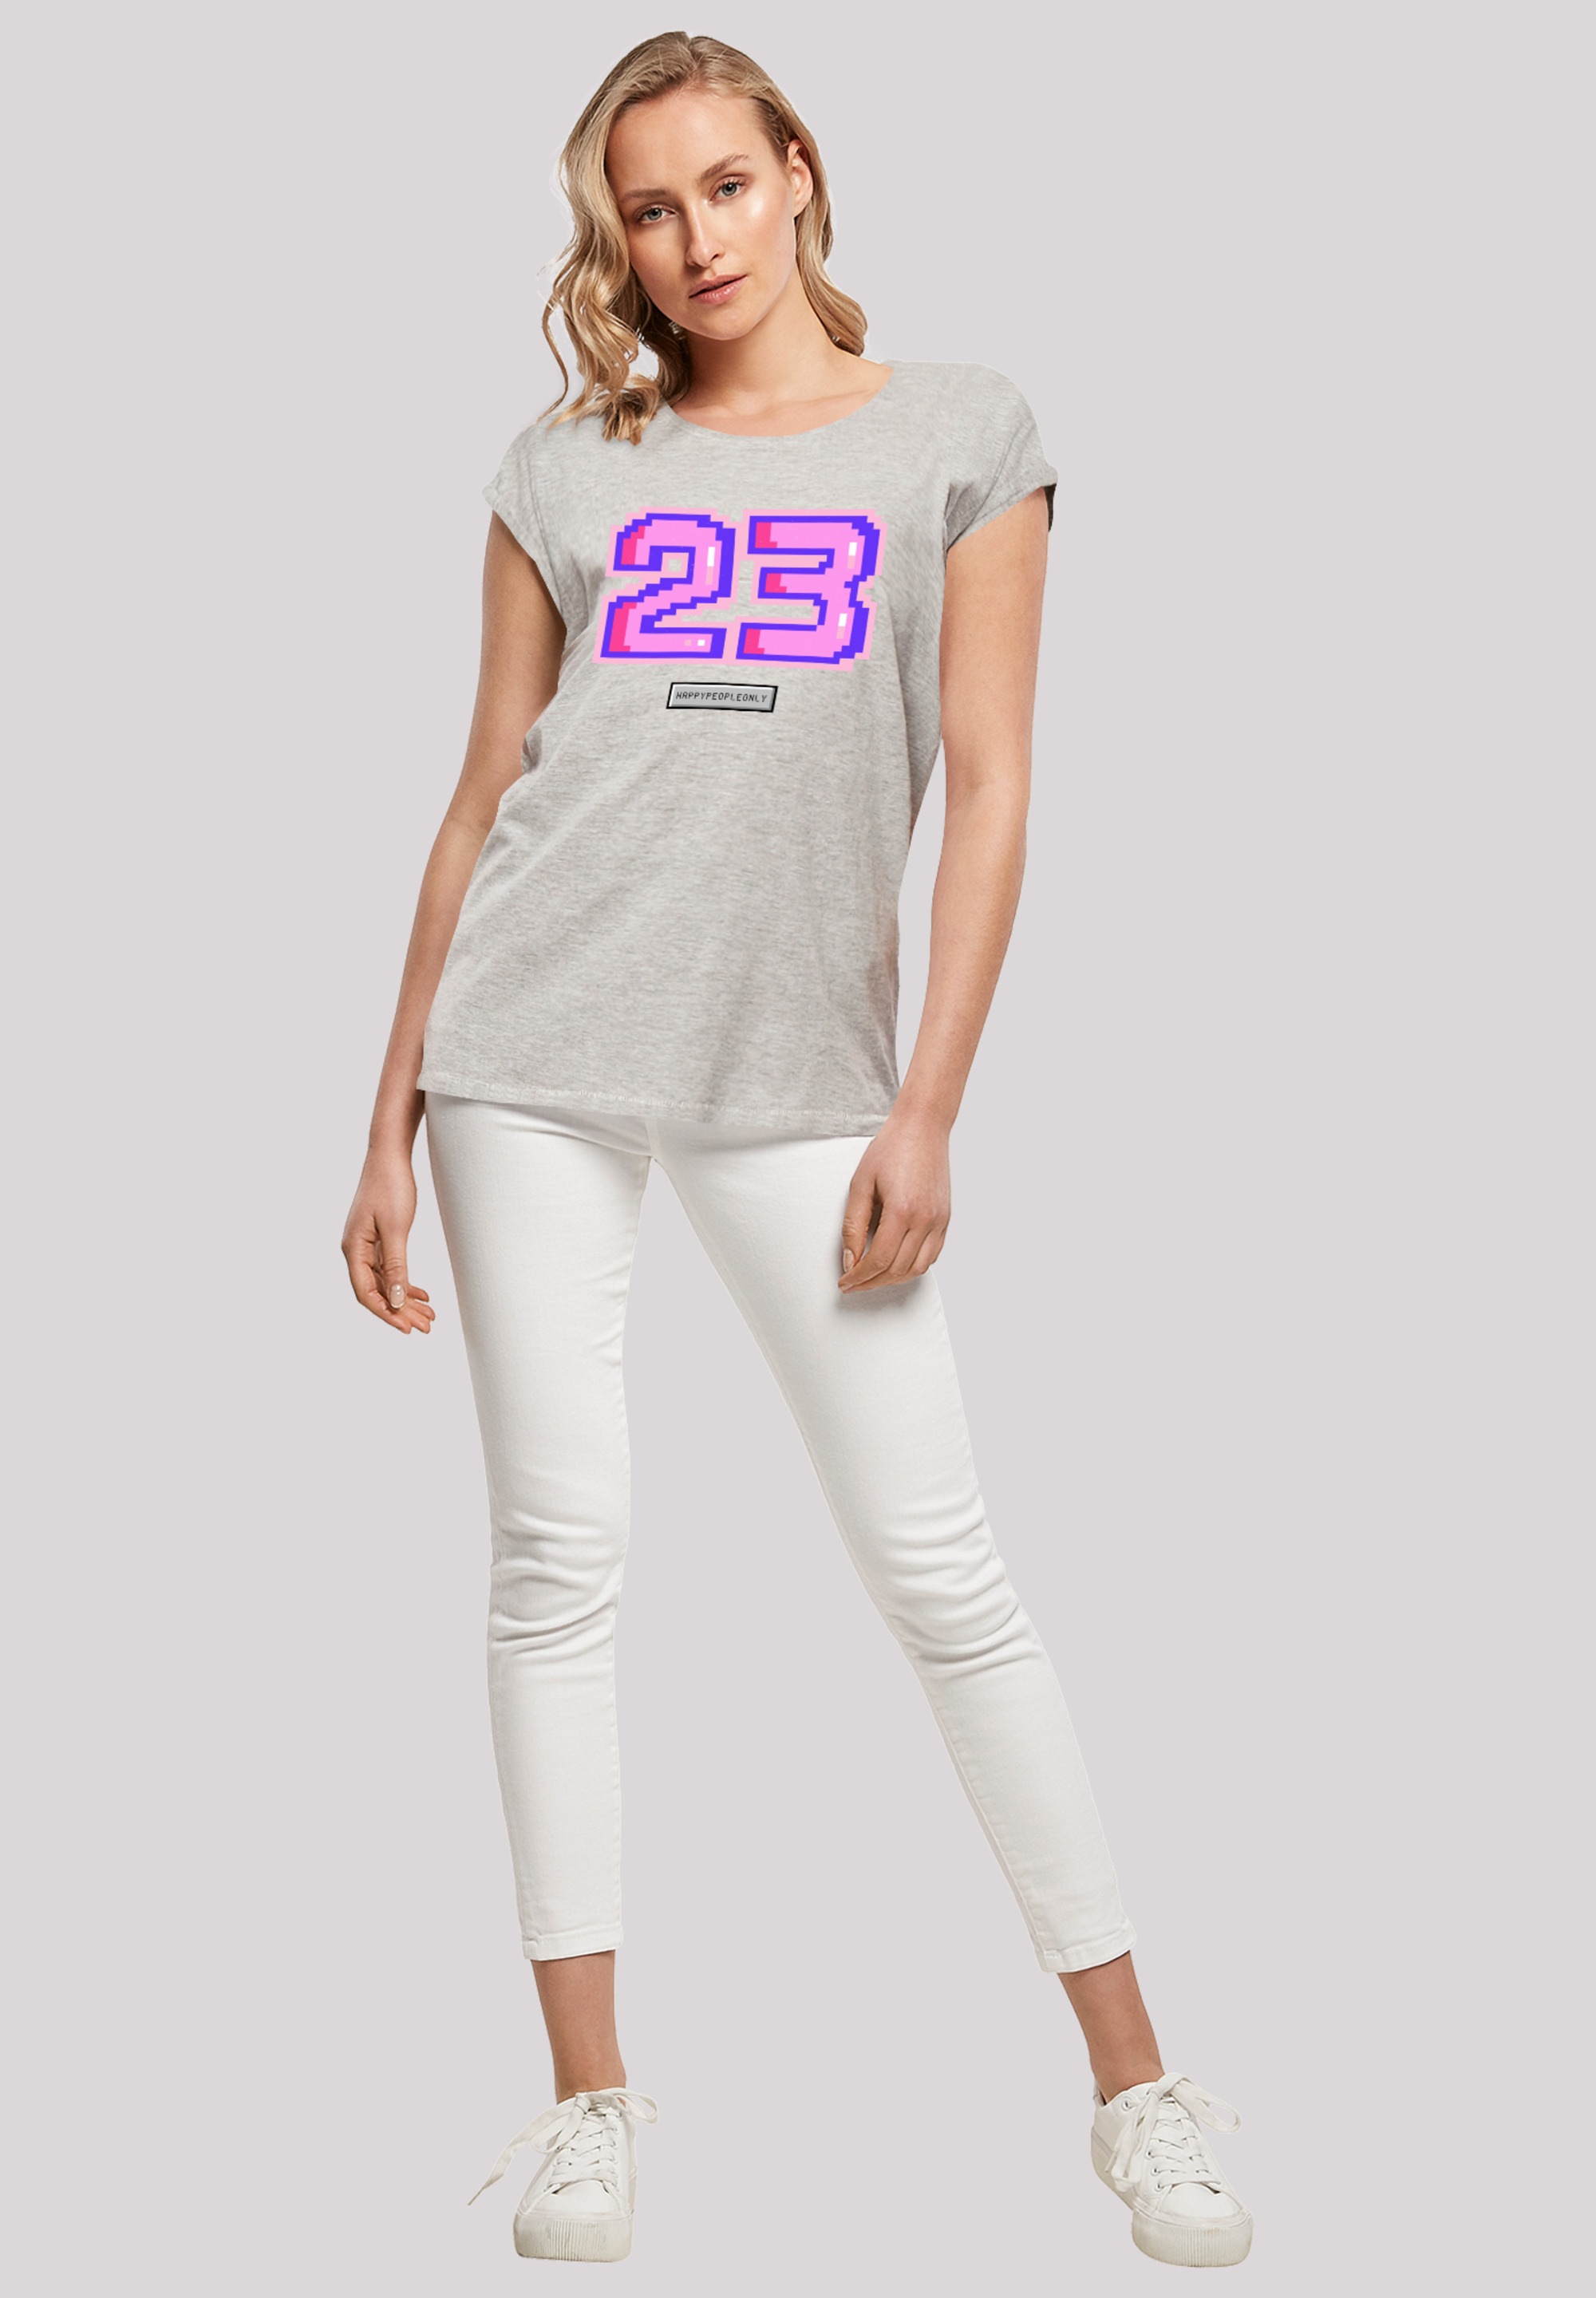 23 T-Shirt online pink«, »Pixel F4NT4STIC Print